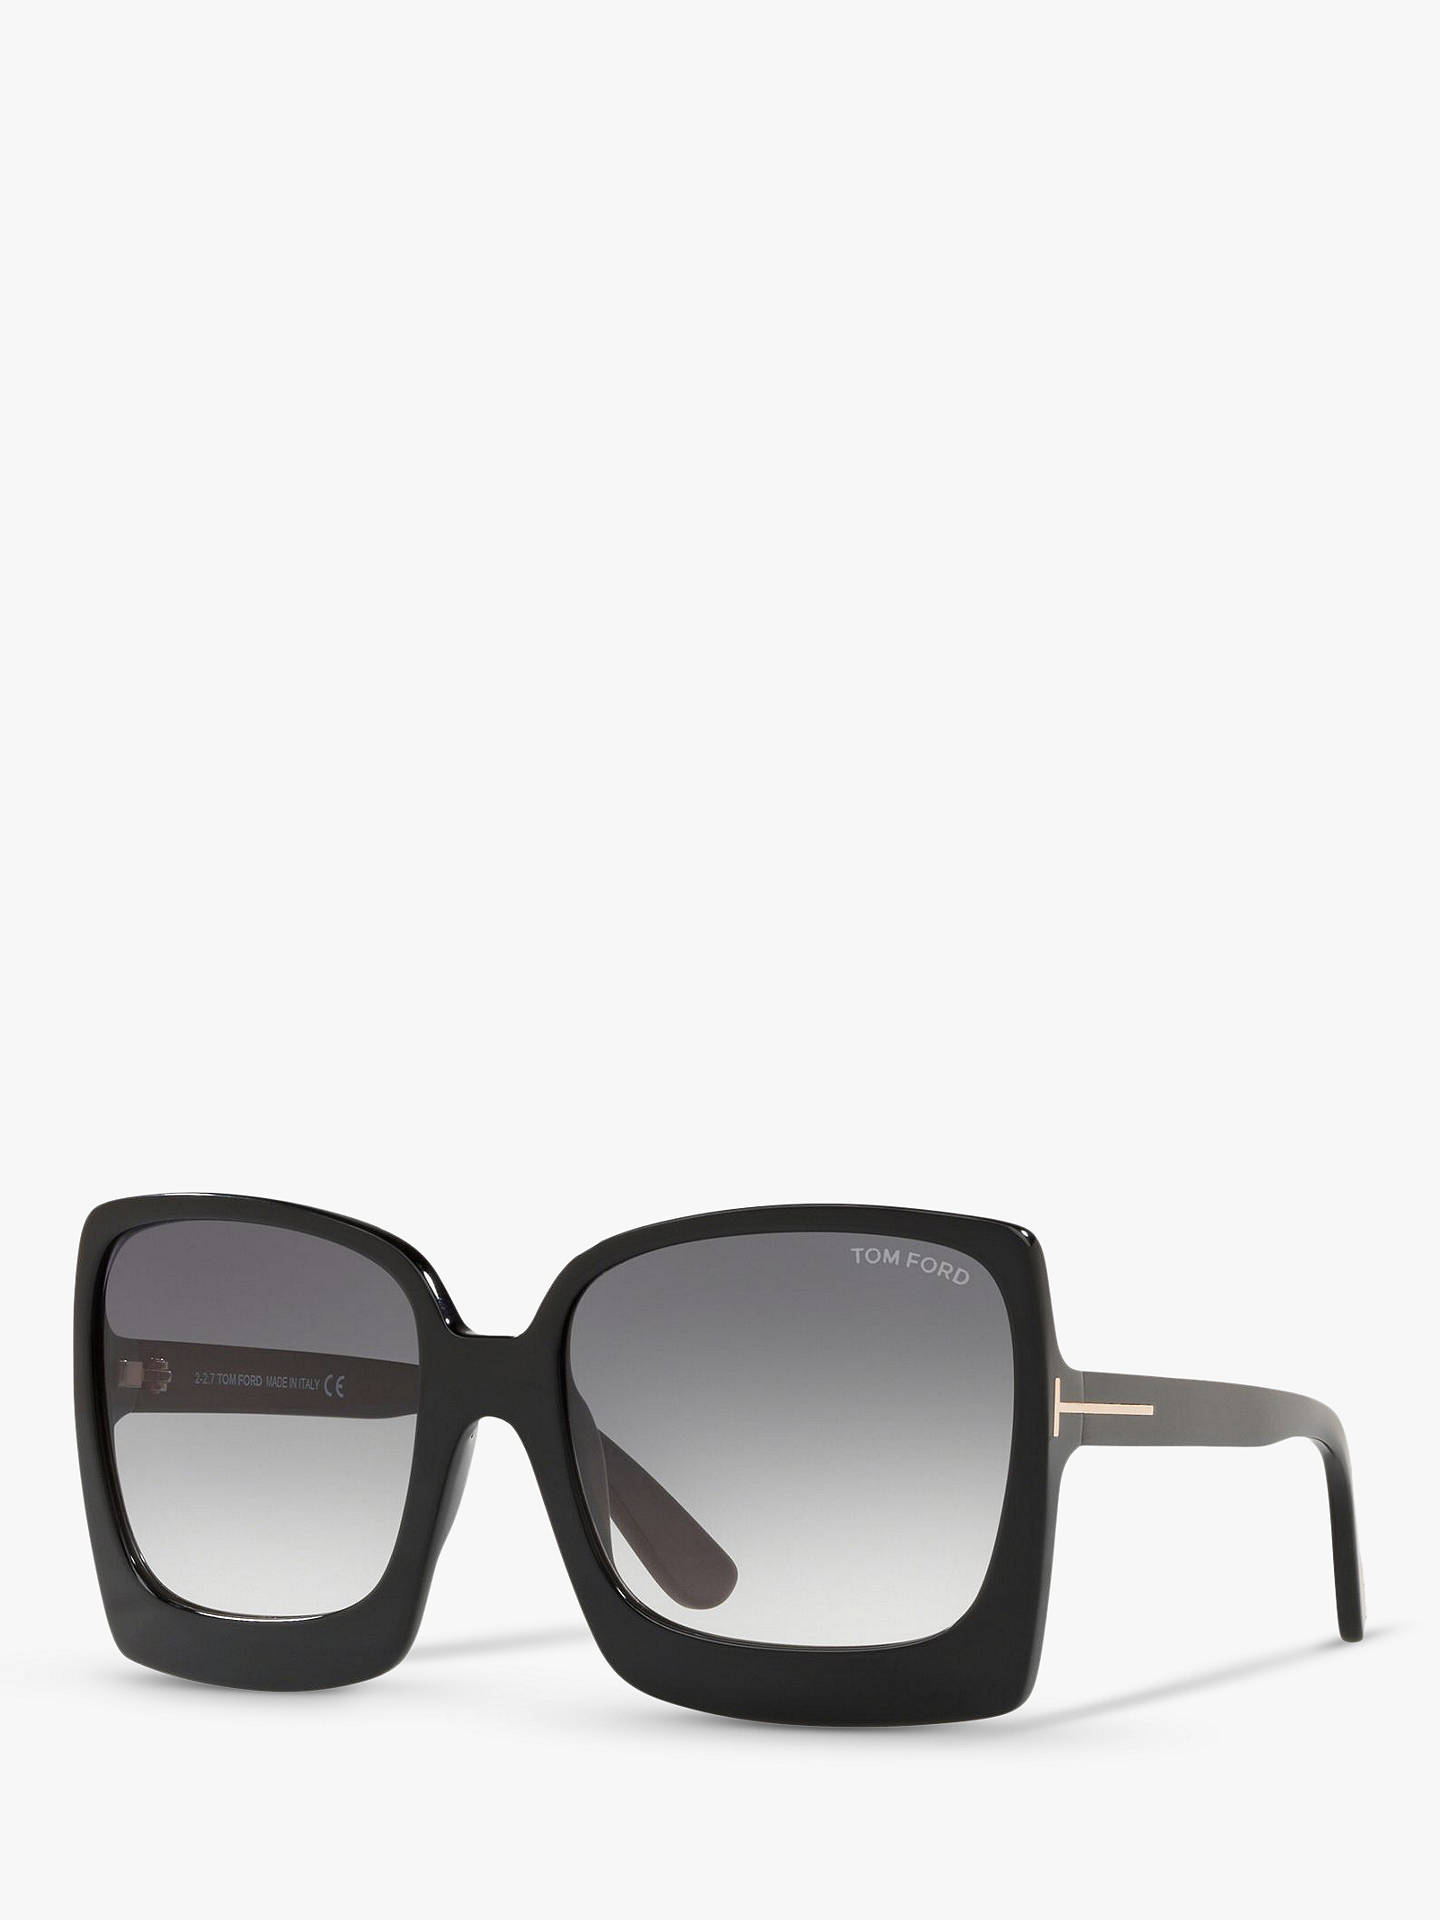 TOM FORD FT0617 Women's Katrine-02 Oversized Square Sunglasses, Black ...